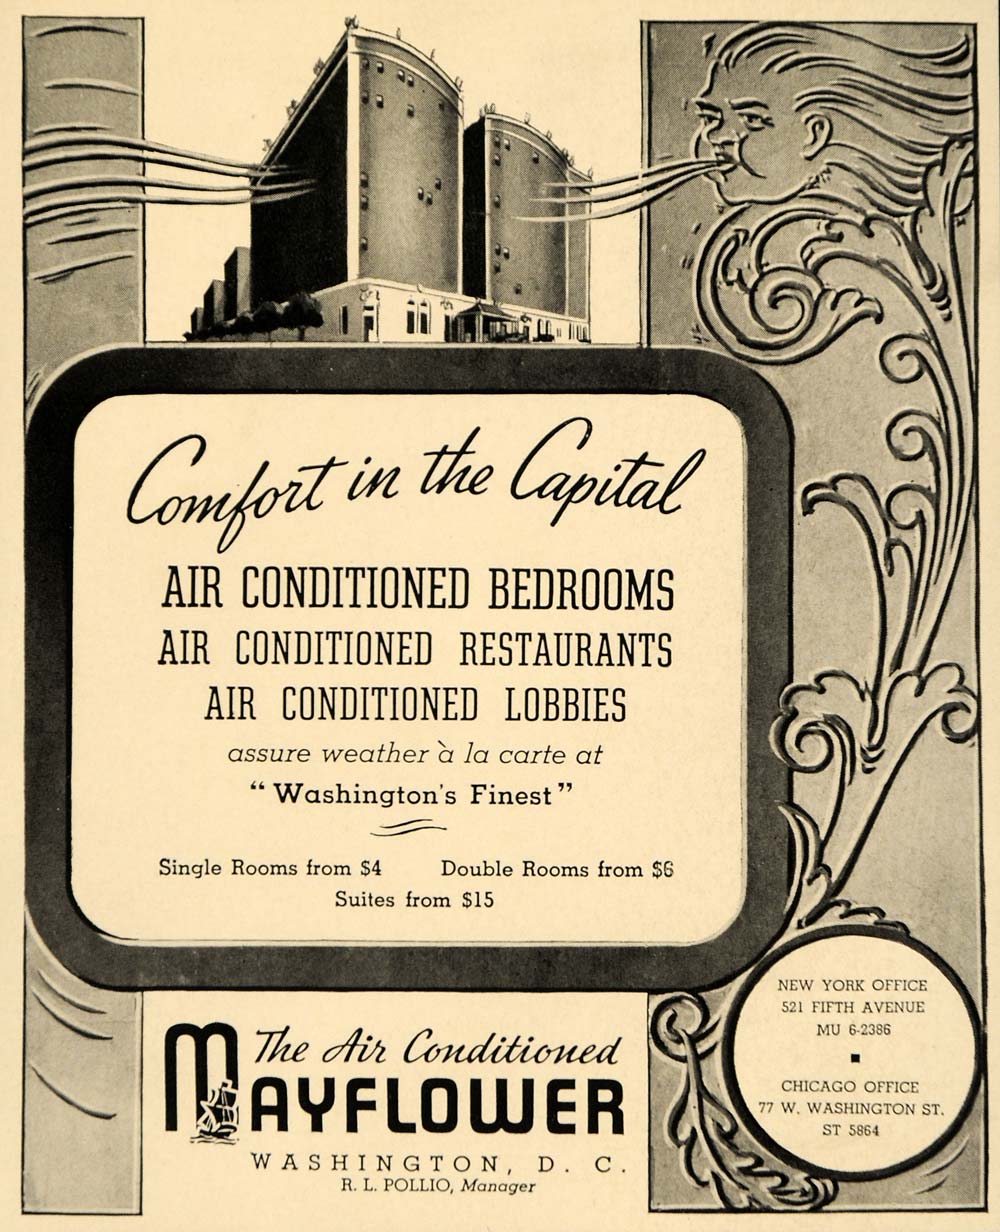 1940 Ad Mayflower U.S. Capitol Hotel Washington D.C. - ORIGINAL ADVERTISING F4B